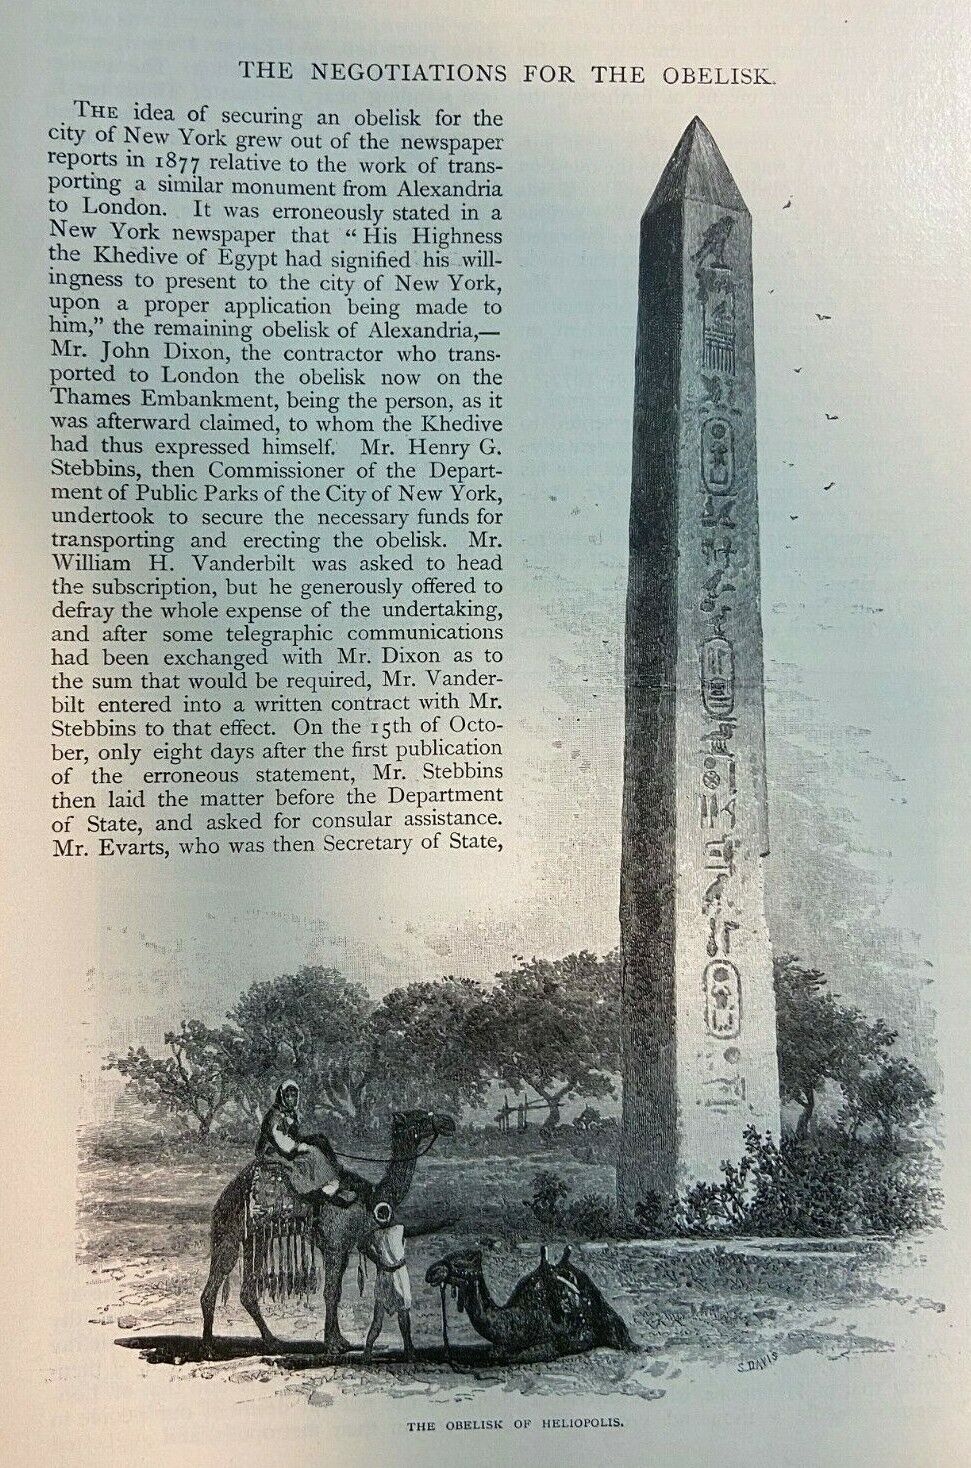 1886 New York Negotiations for the Obelisk of Heleopolis illustrated